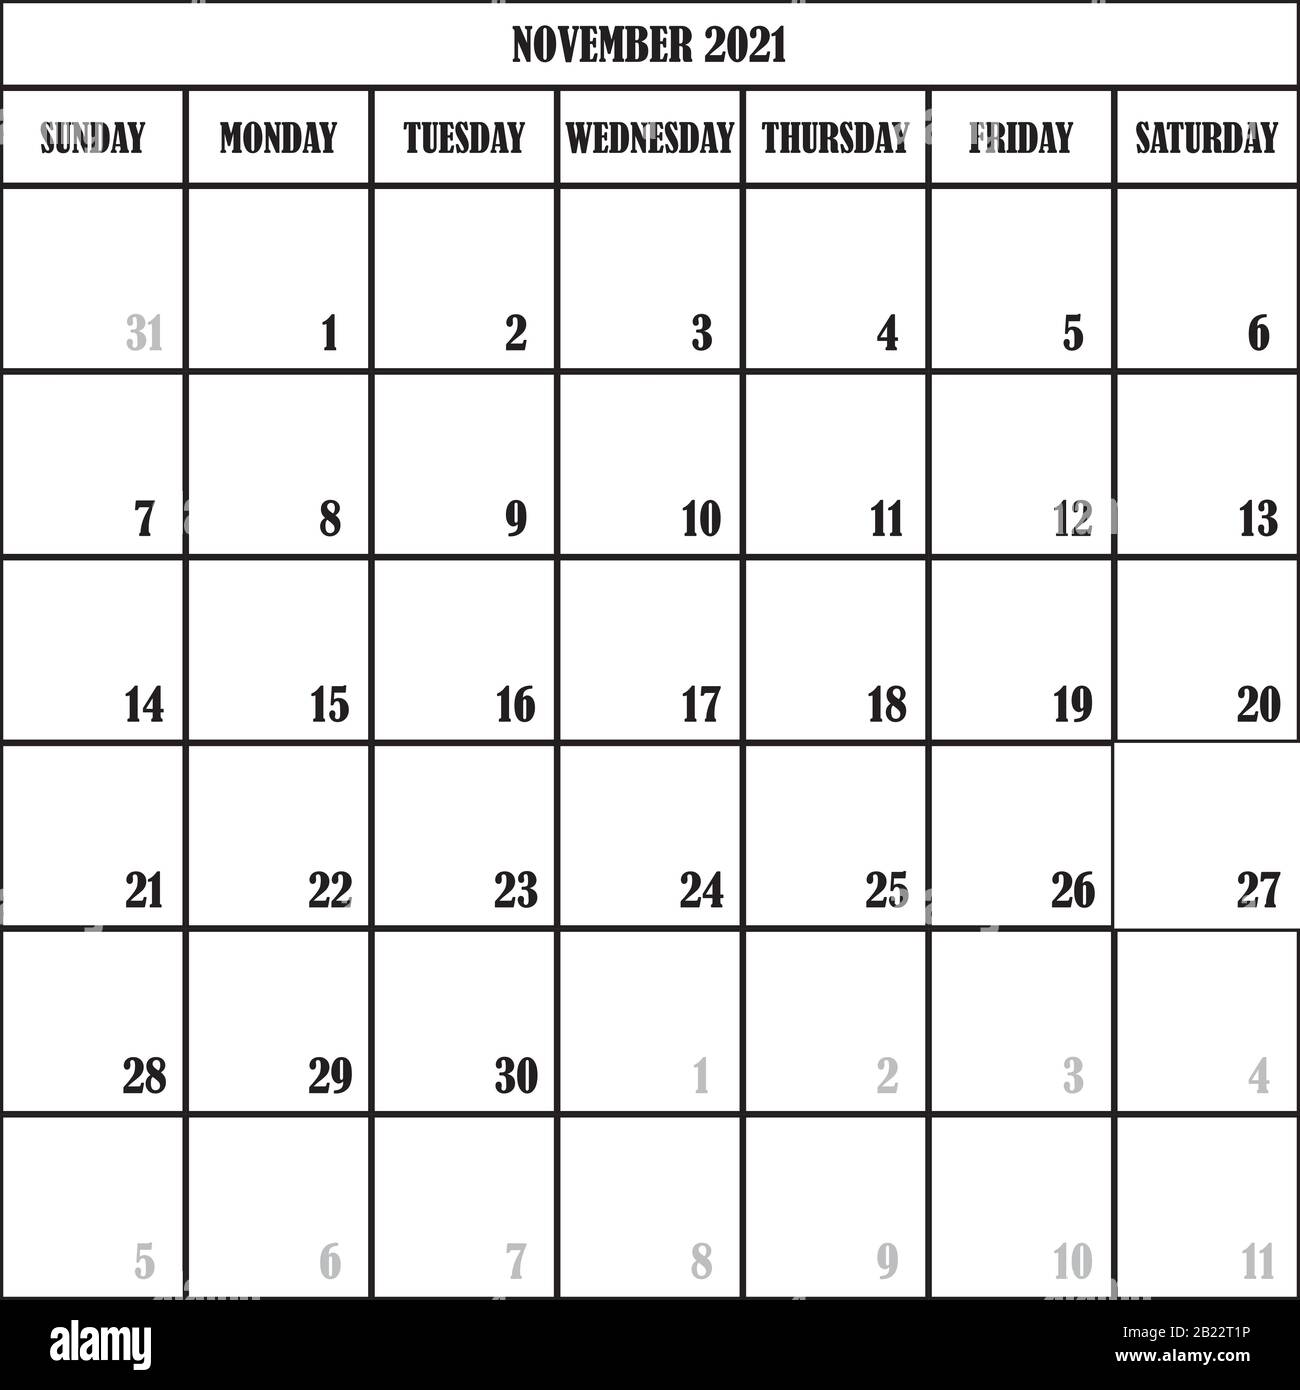 transparent november 2021 calendar Calendar Planner Month November 2021 On Transparent Background Designer Cut Stock Vector Image Art Alamy transparent november 2021 calendar